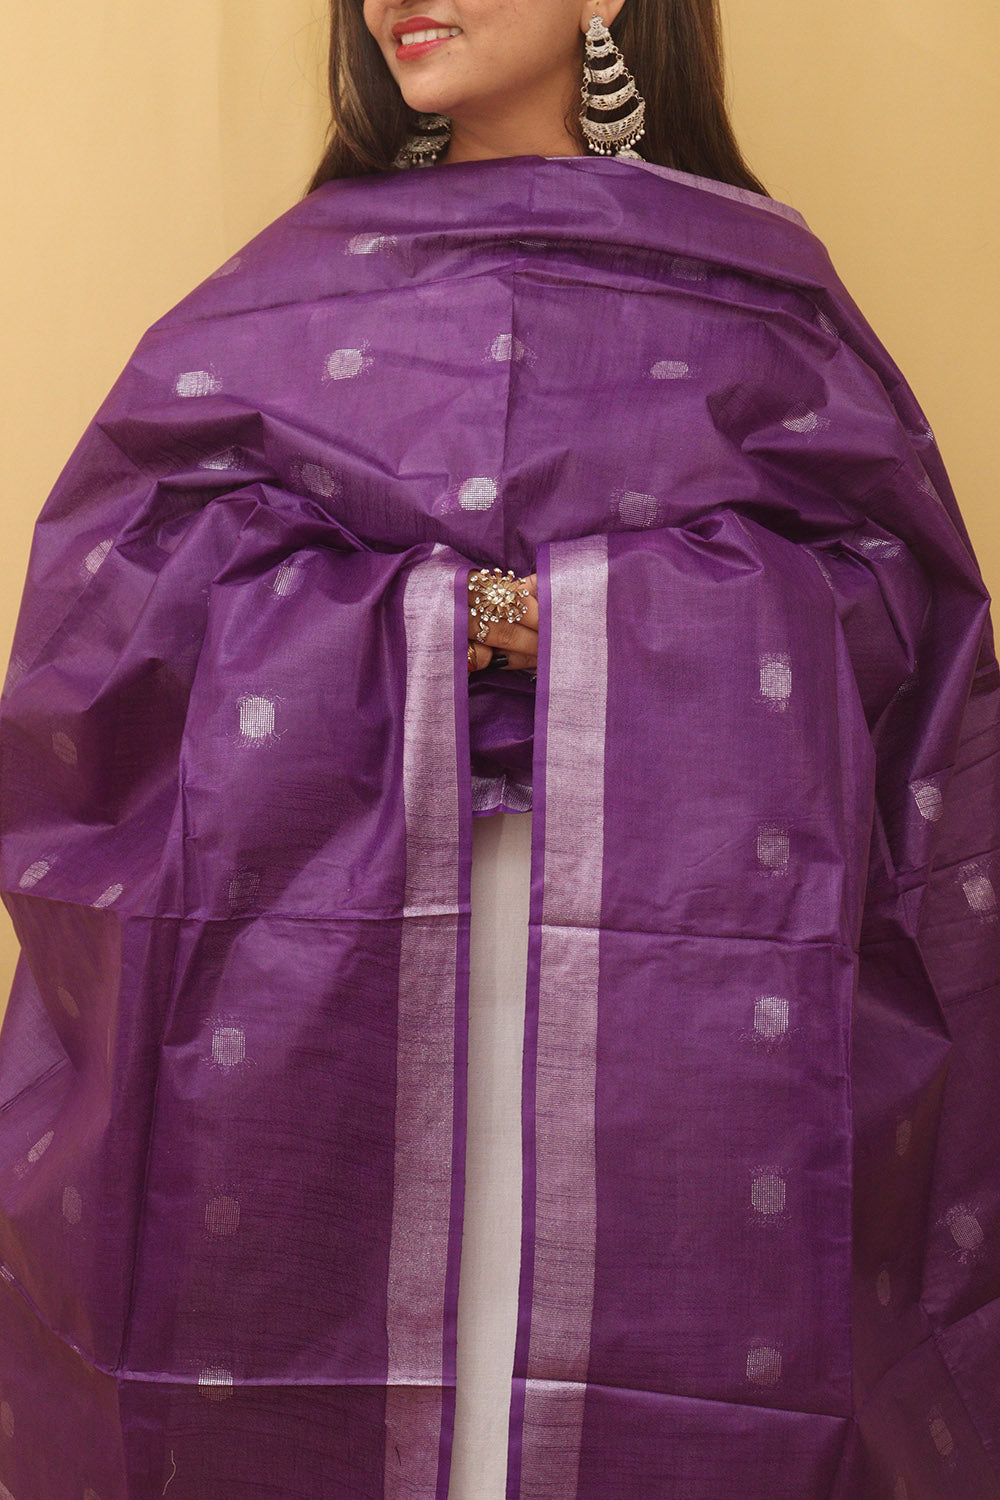 Purple Bhagalpur Handloom Linen Cotton Dupatta - divyaindia 